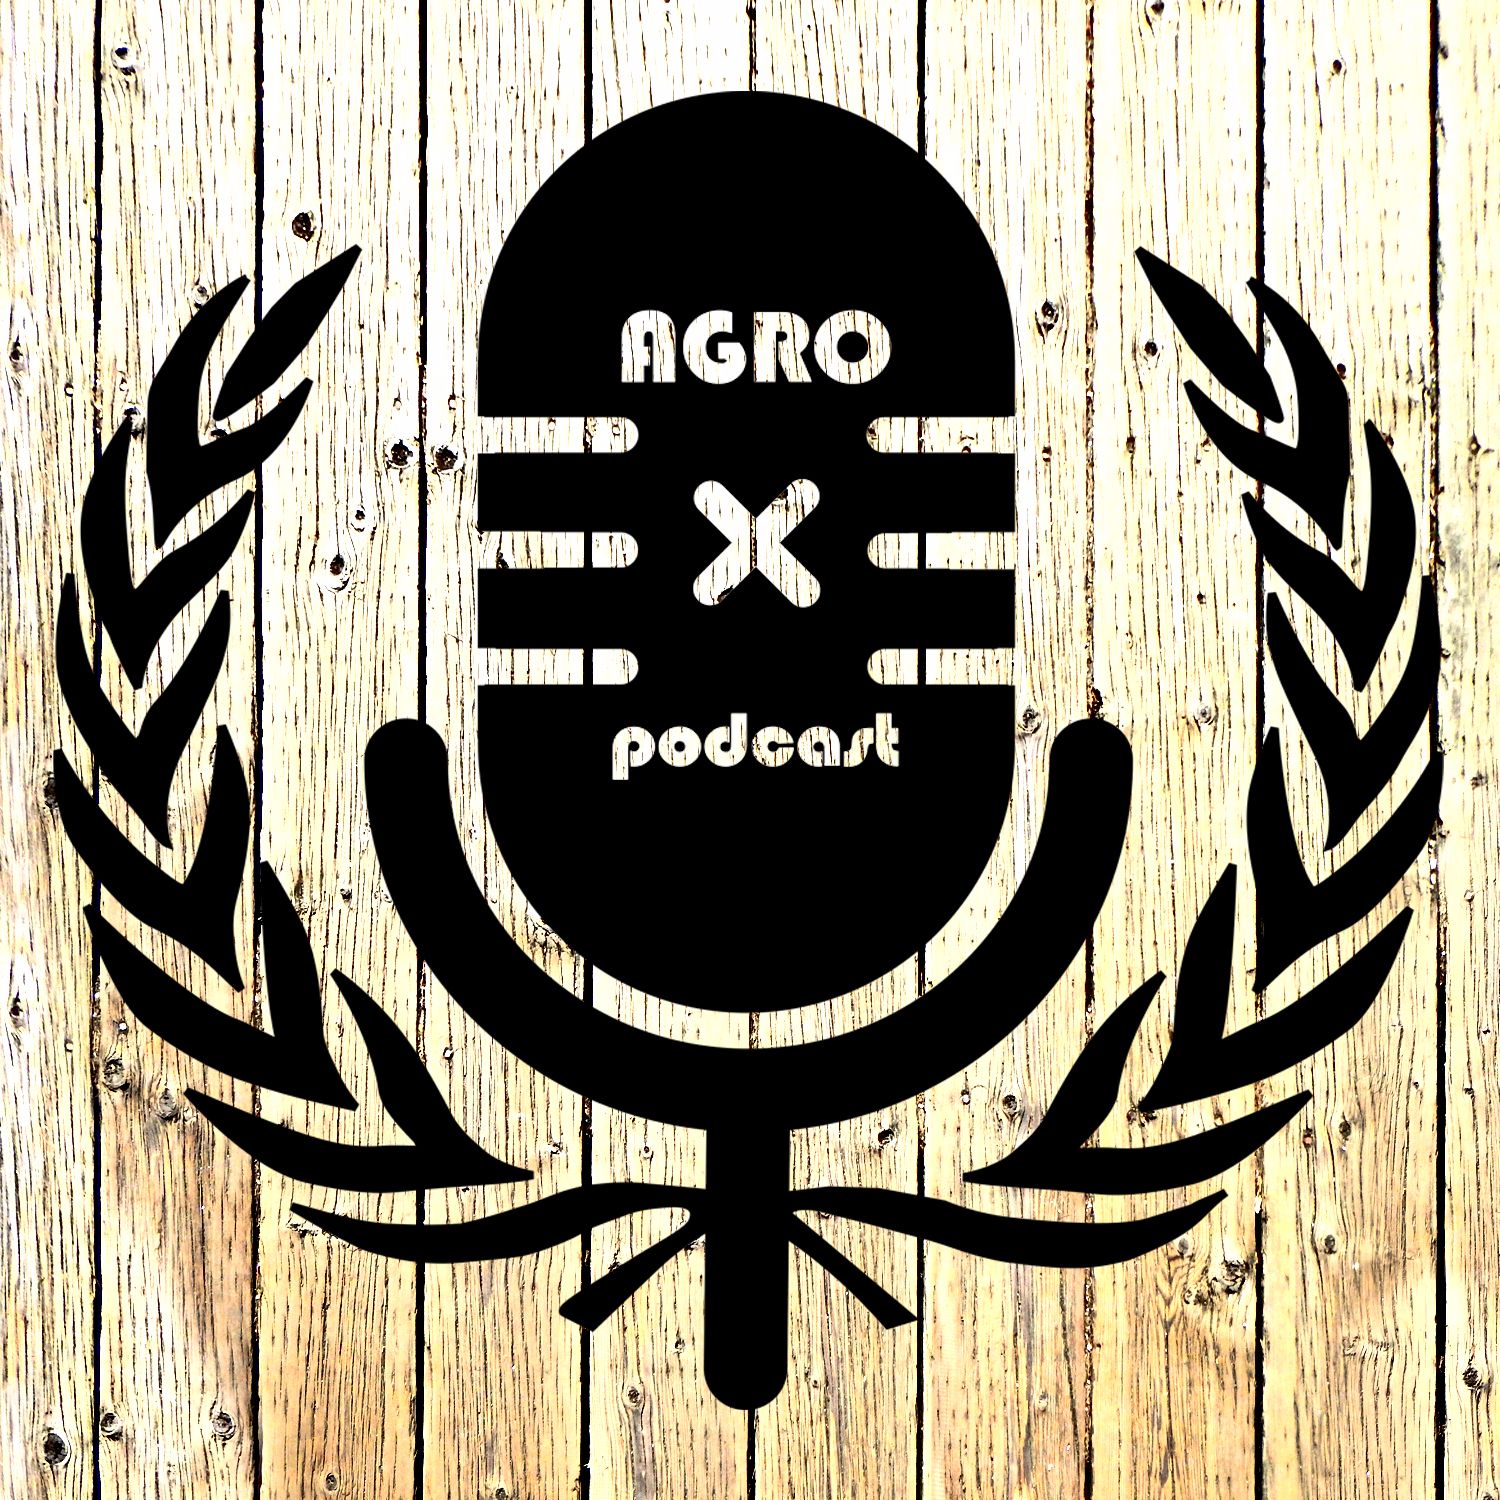 Agro podcast